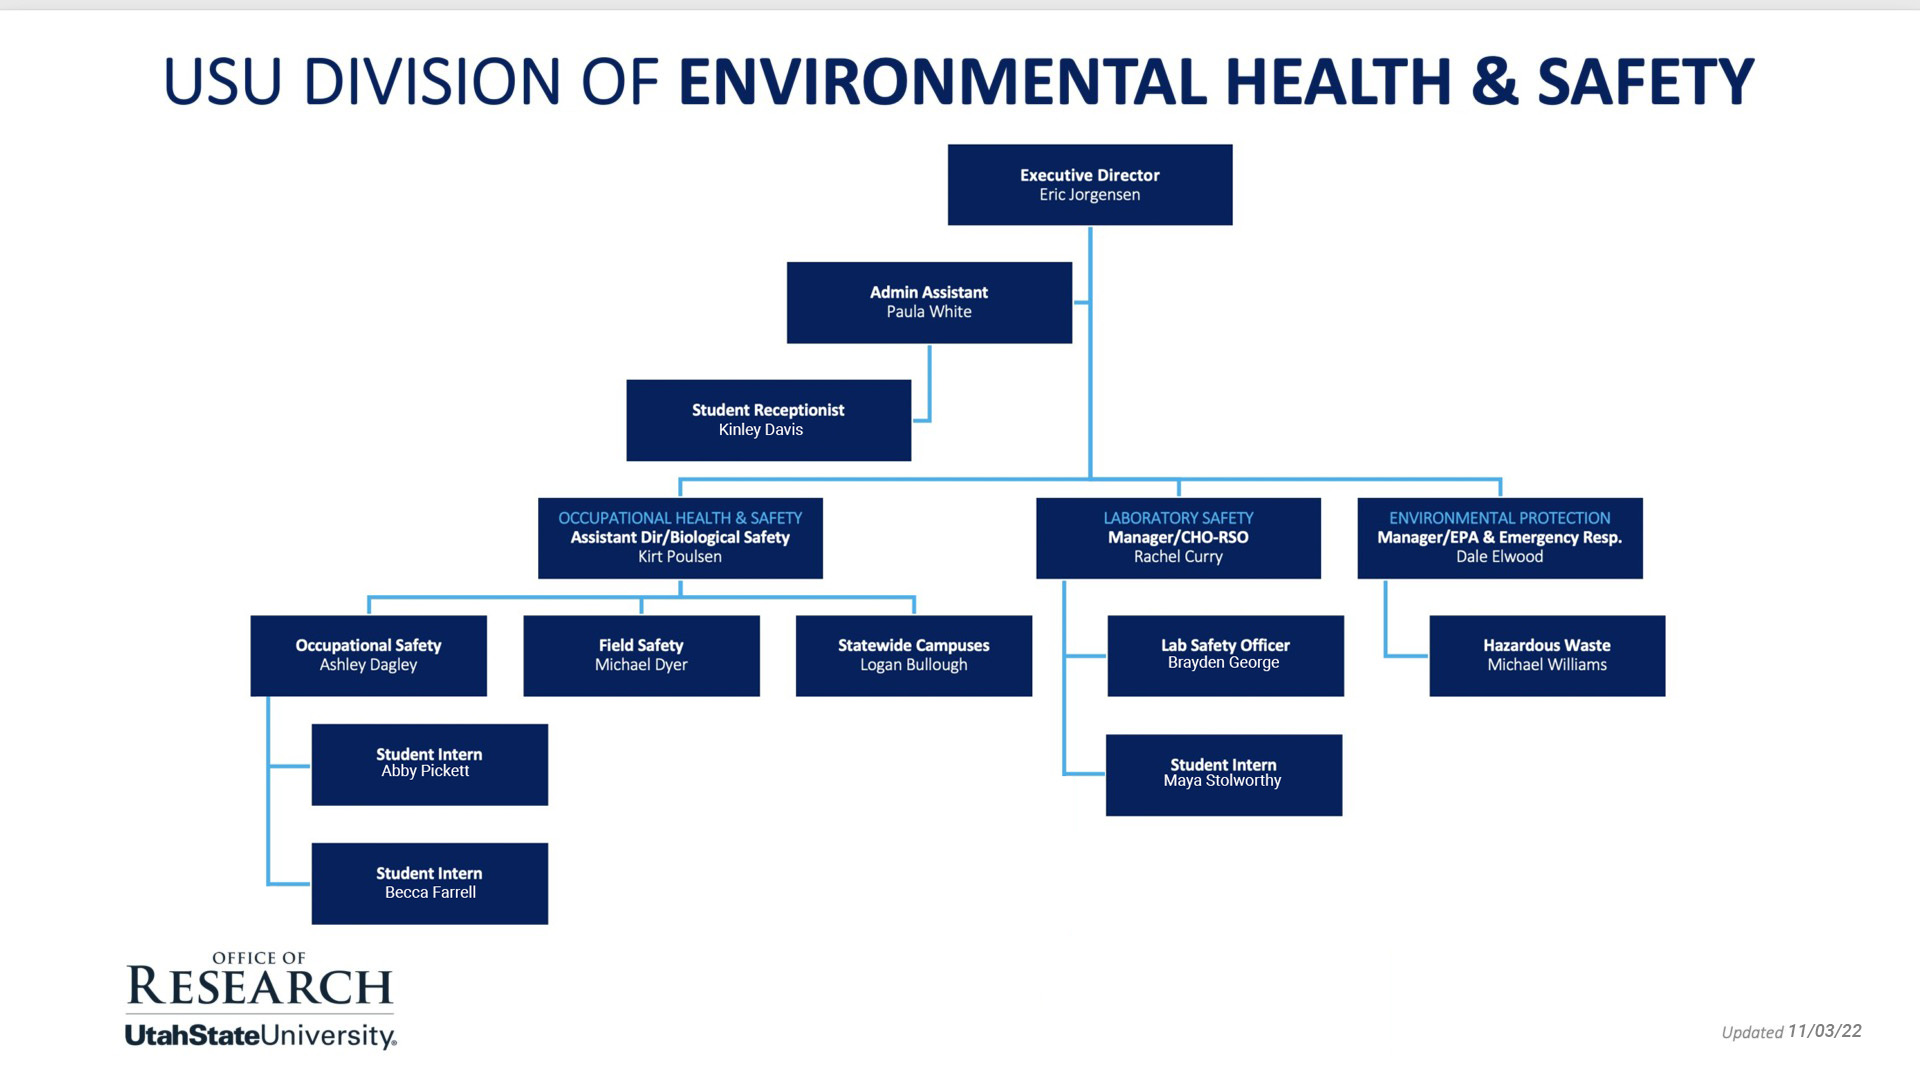 USU Division of Environmental Health & Safety